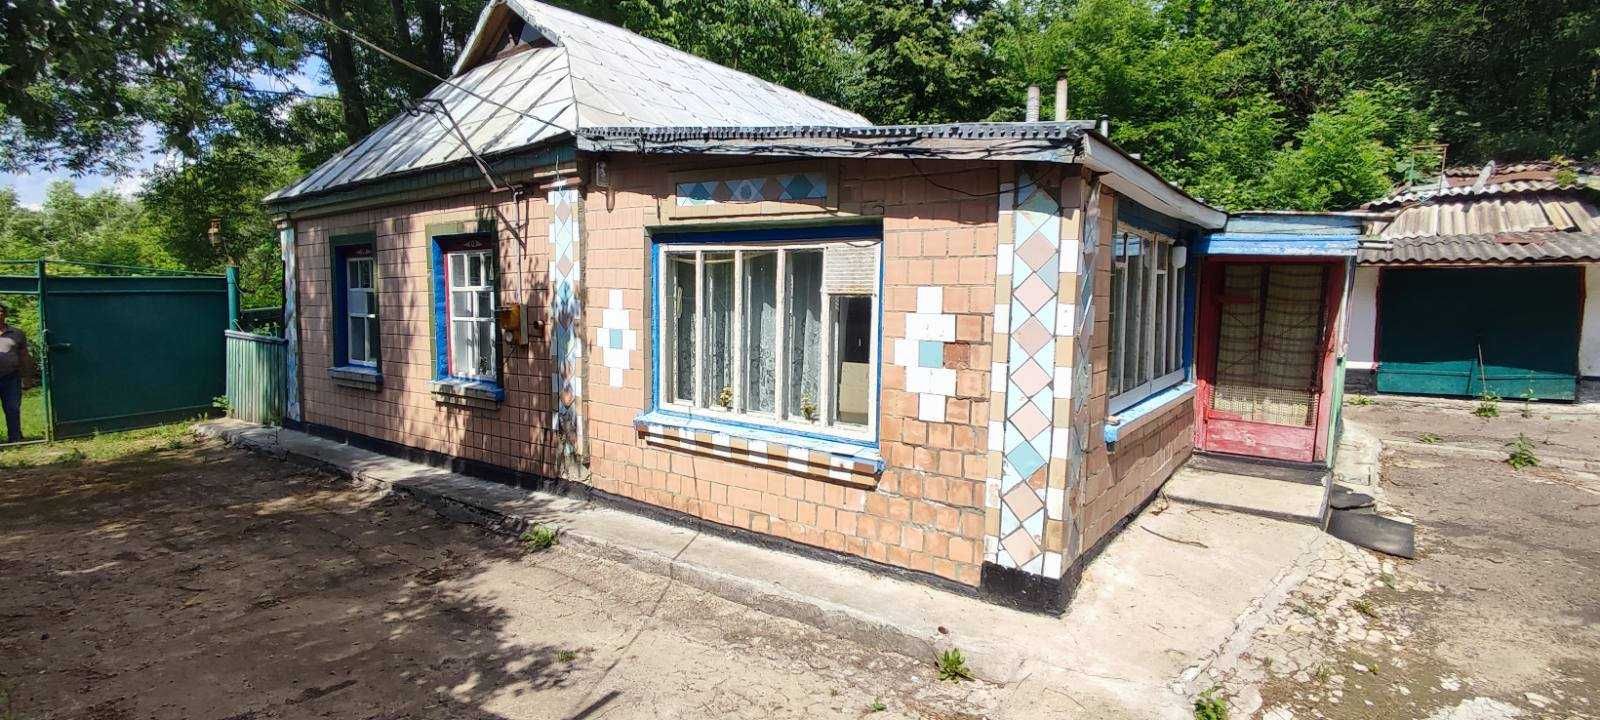 Продам будинок у селі Степове (Київська обл. Тетіївська громада)